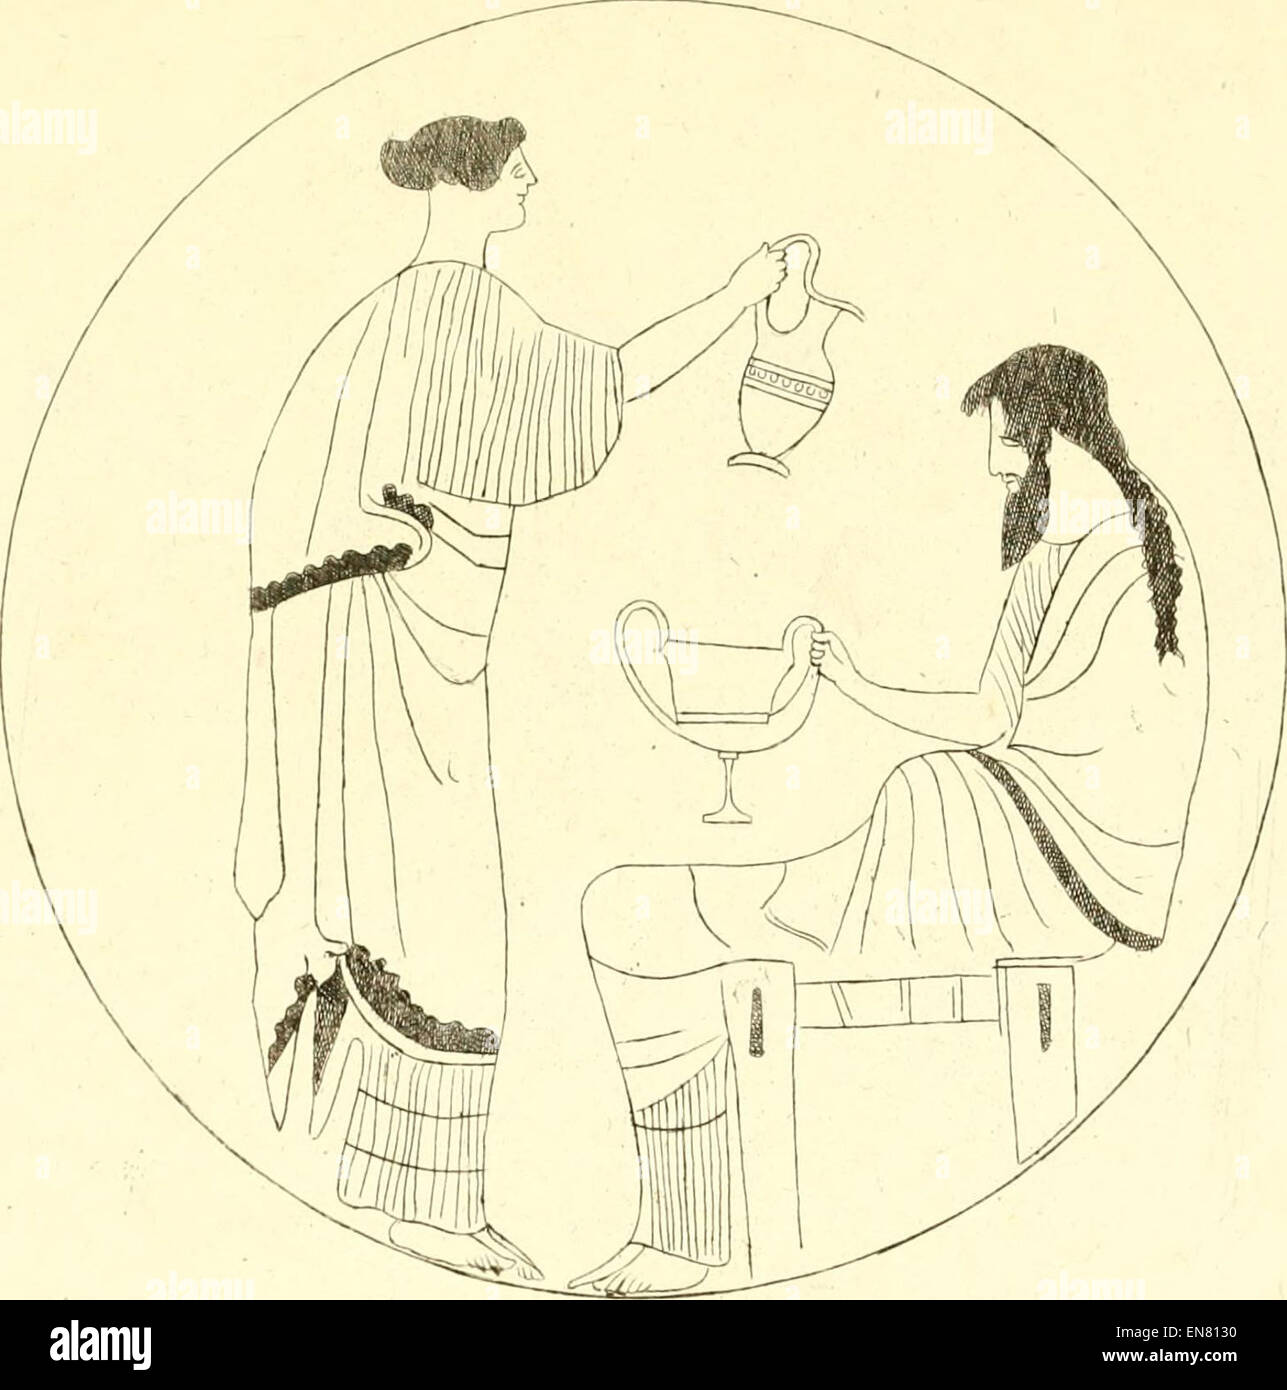 INGHIRAMI(1835) Pitture di vasi fittili Vol3 T252 (14761929506) Stock Photo